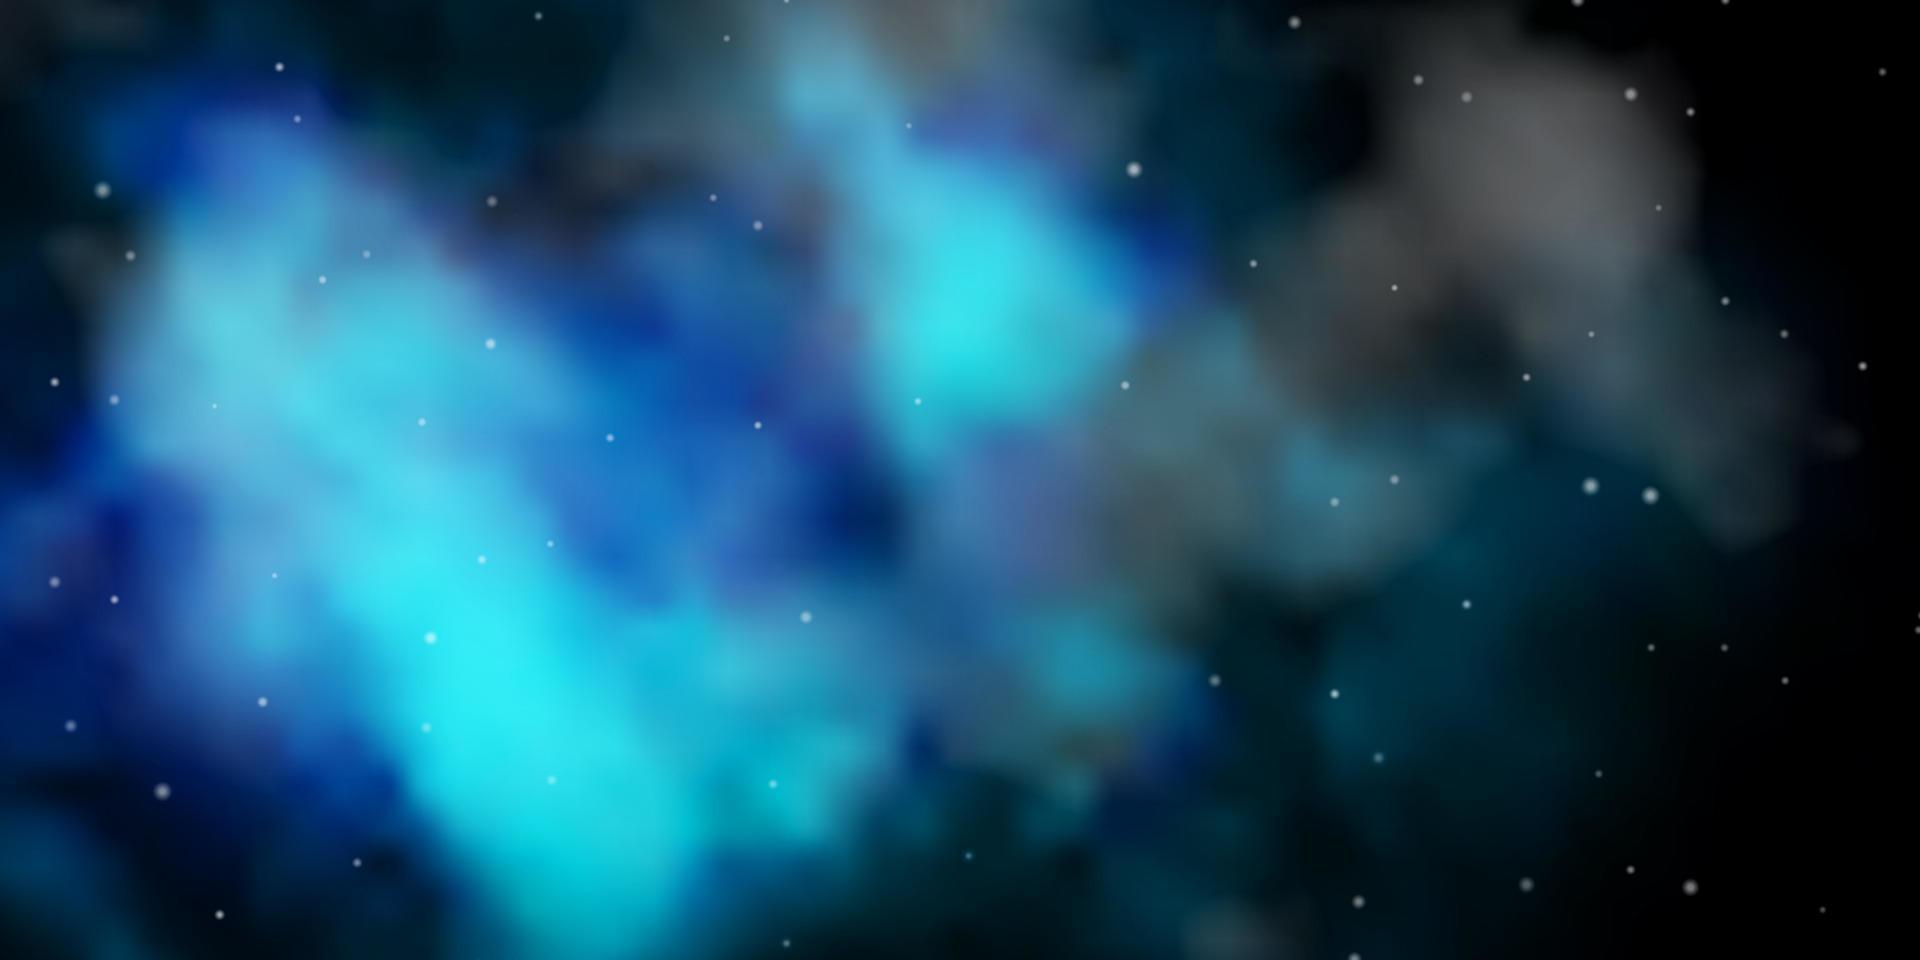 diseño de vector azul oscuro con estrellas brillantes.